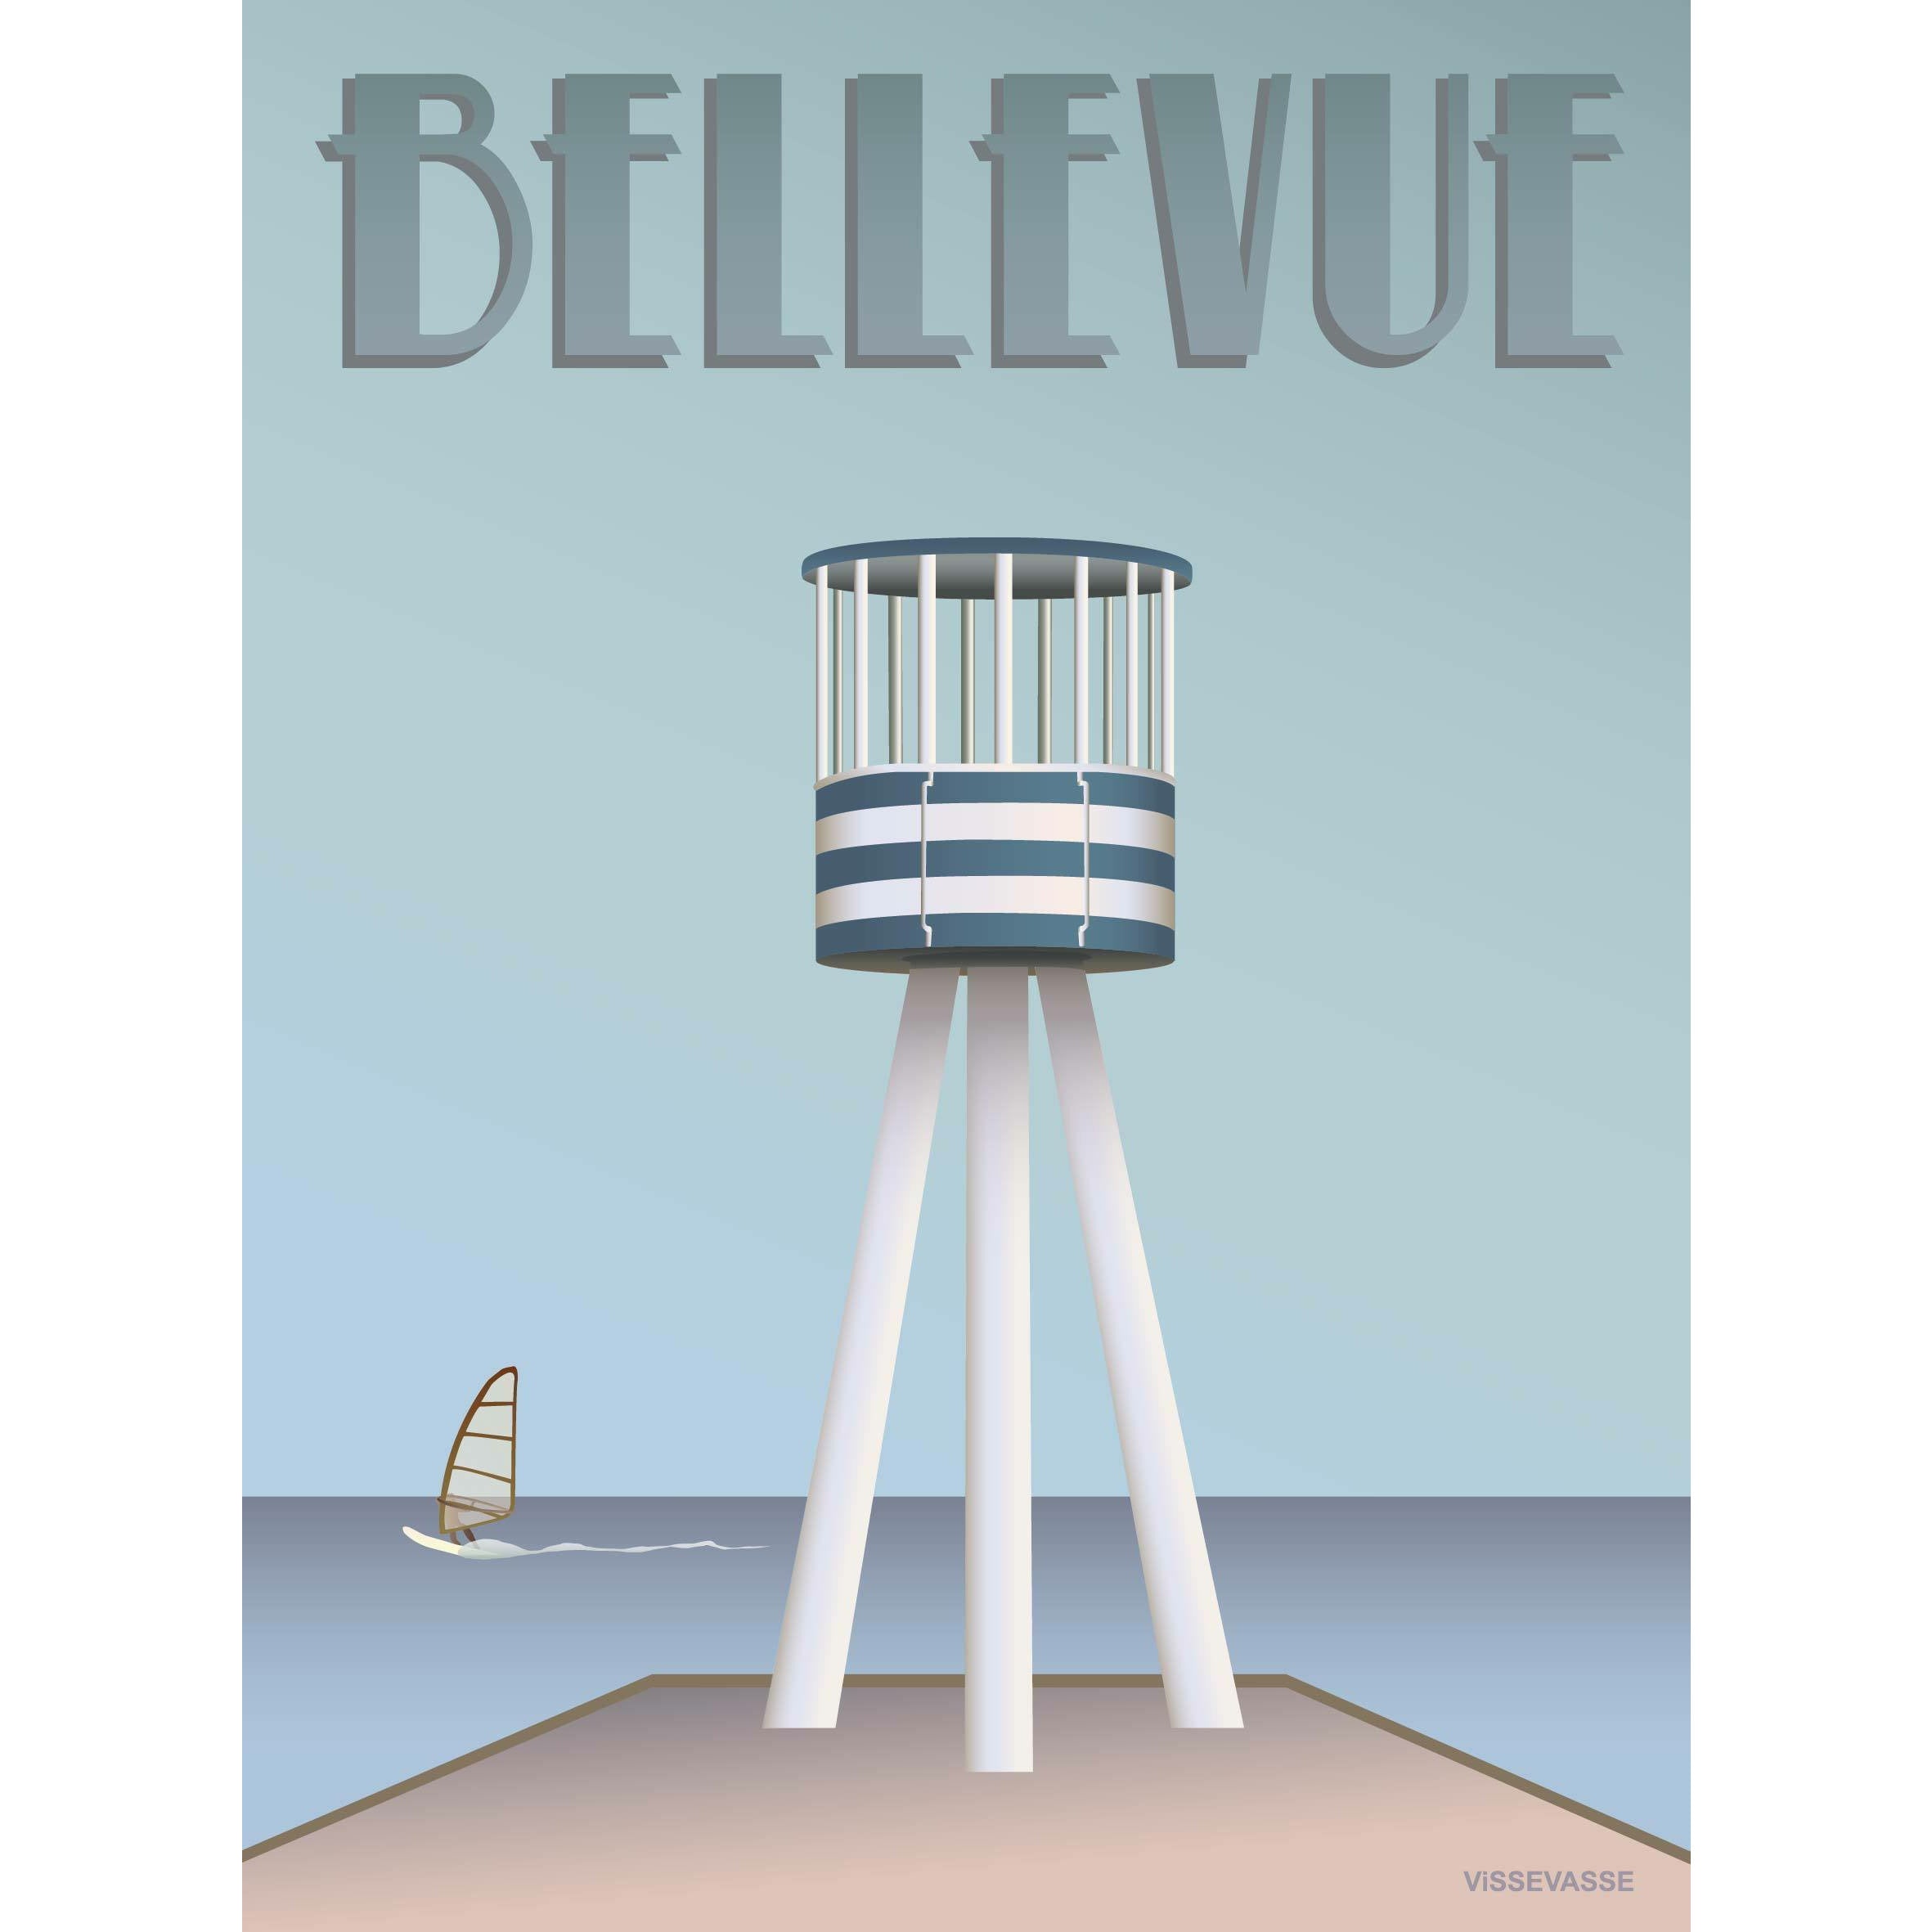 Vissevasse Bellevue Lifeguard Tower -affisch, 70x100 cm